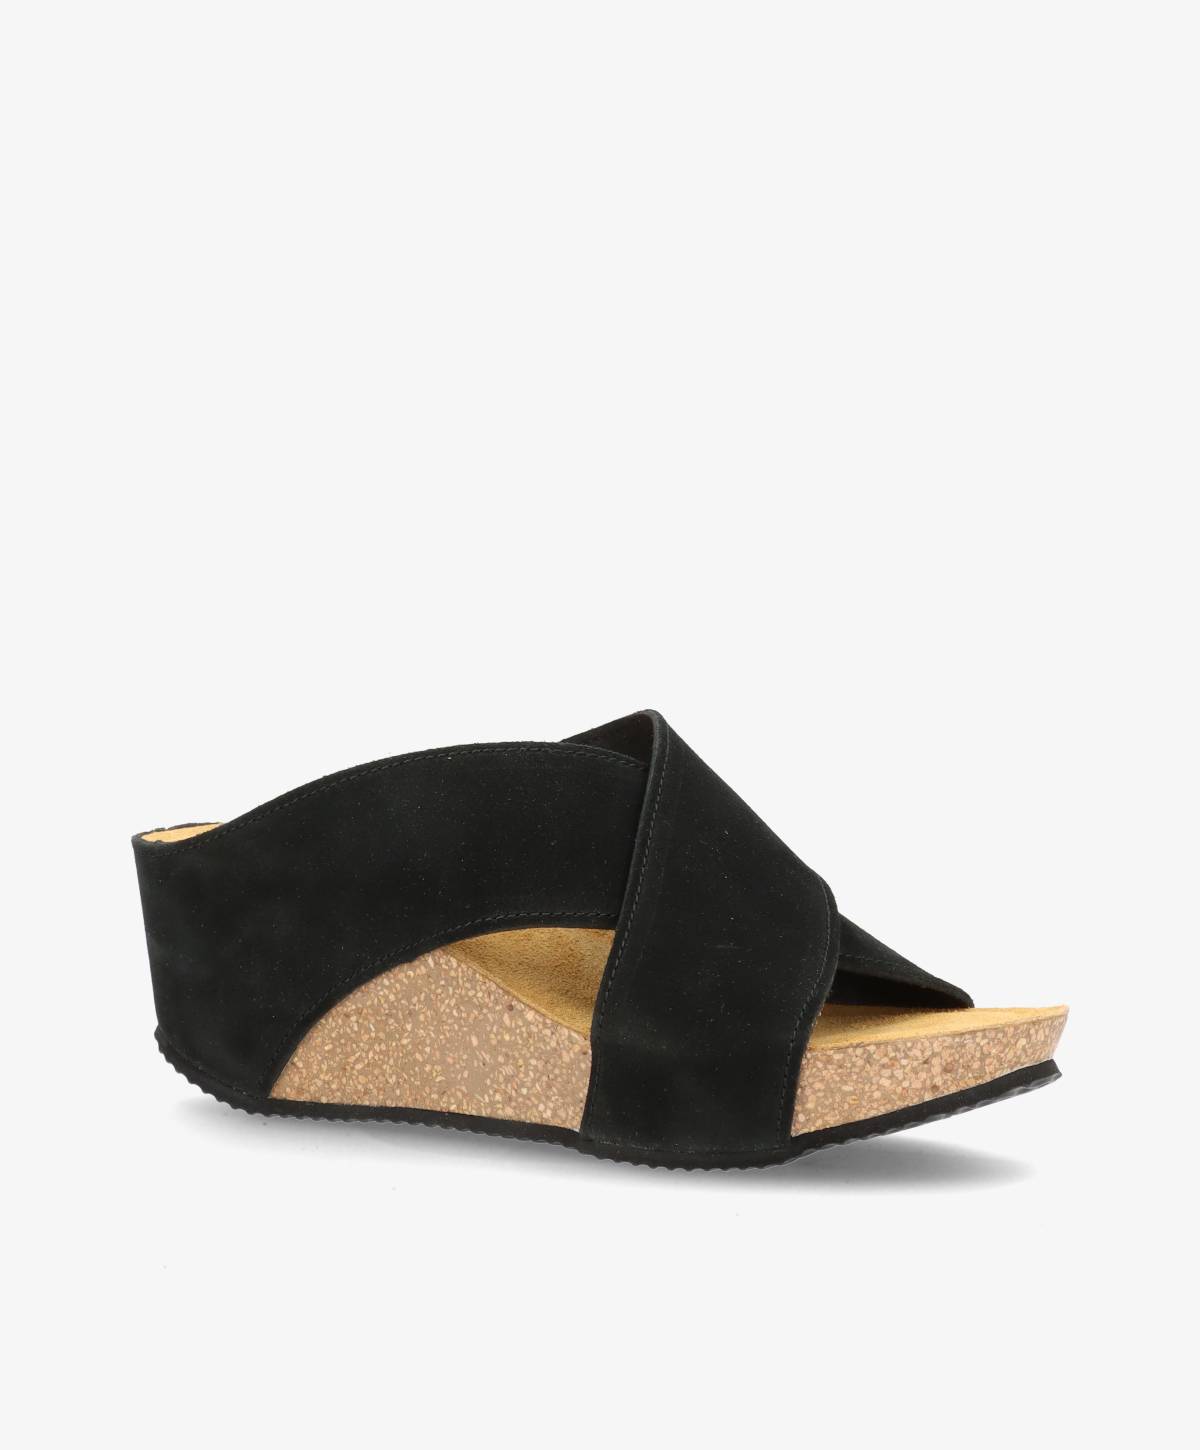 Shoedesign Copenhagen Shadow sandal, Black Suede